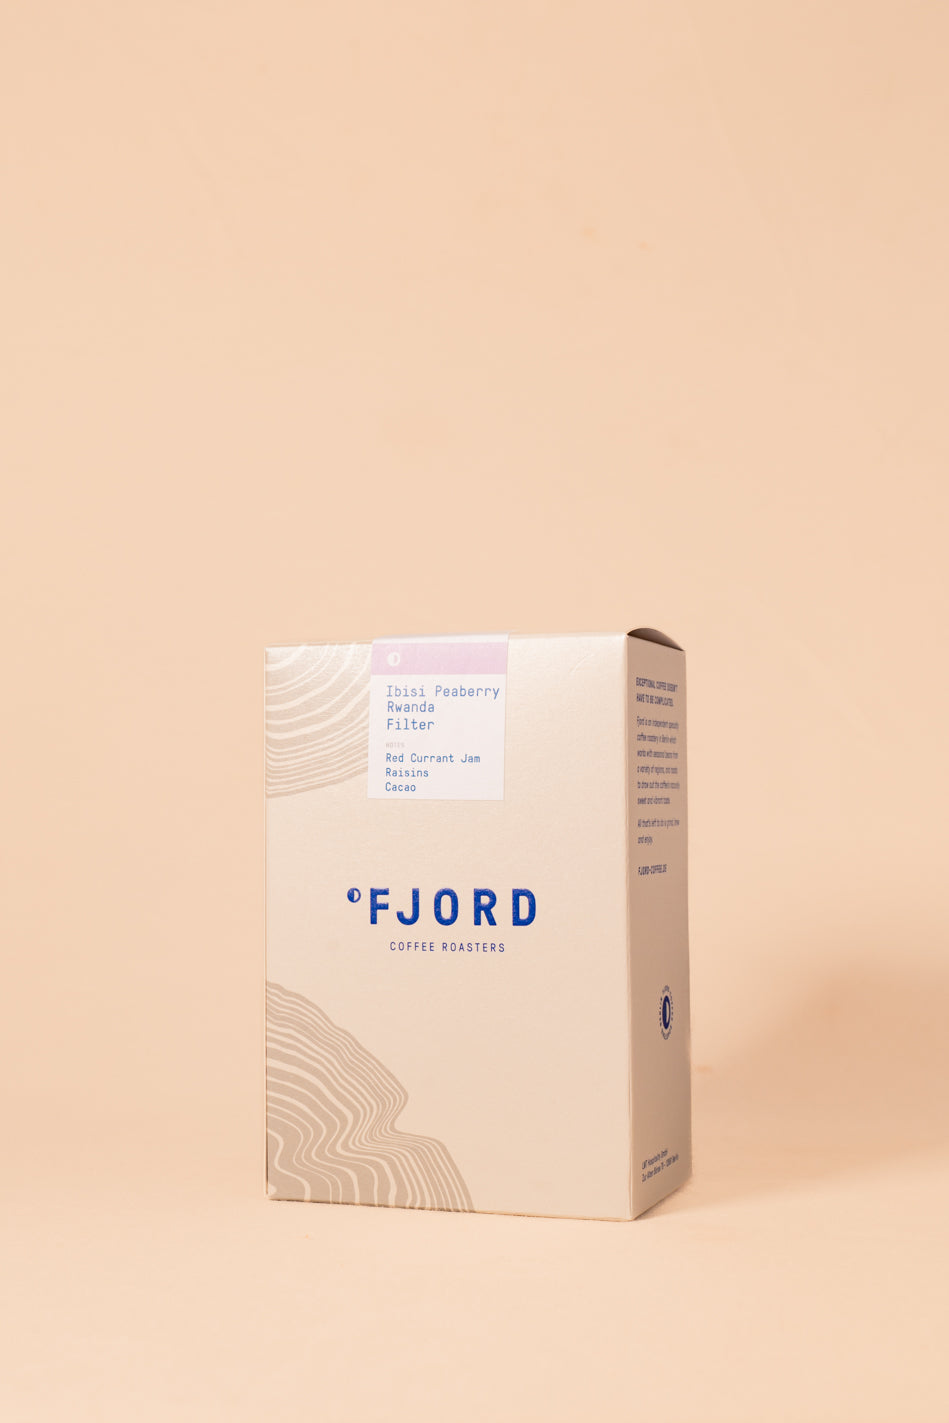 Fjord Coffee | Ibisi Peaberry, Rwanda - Filter 250g